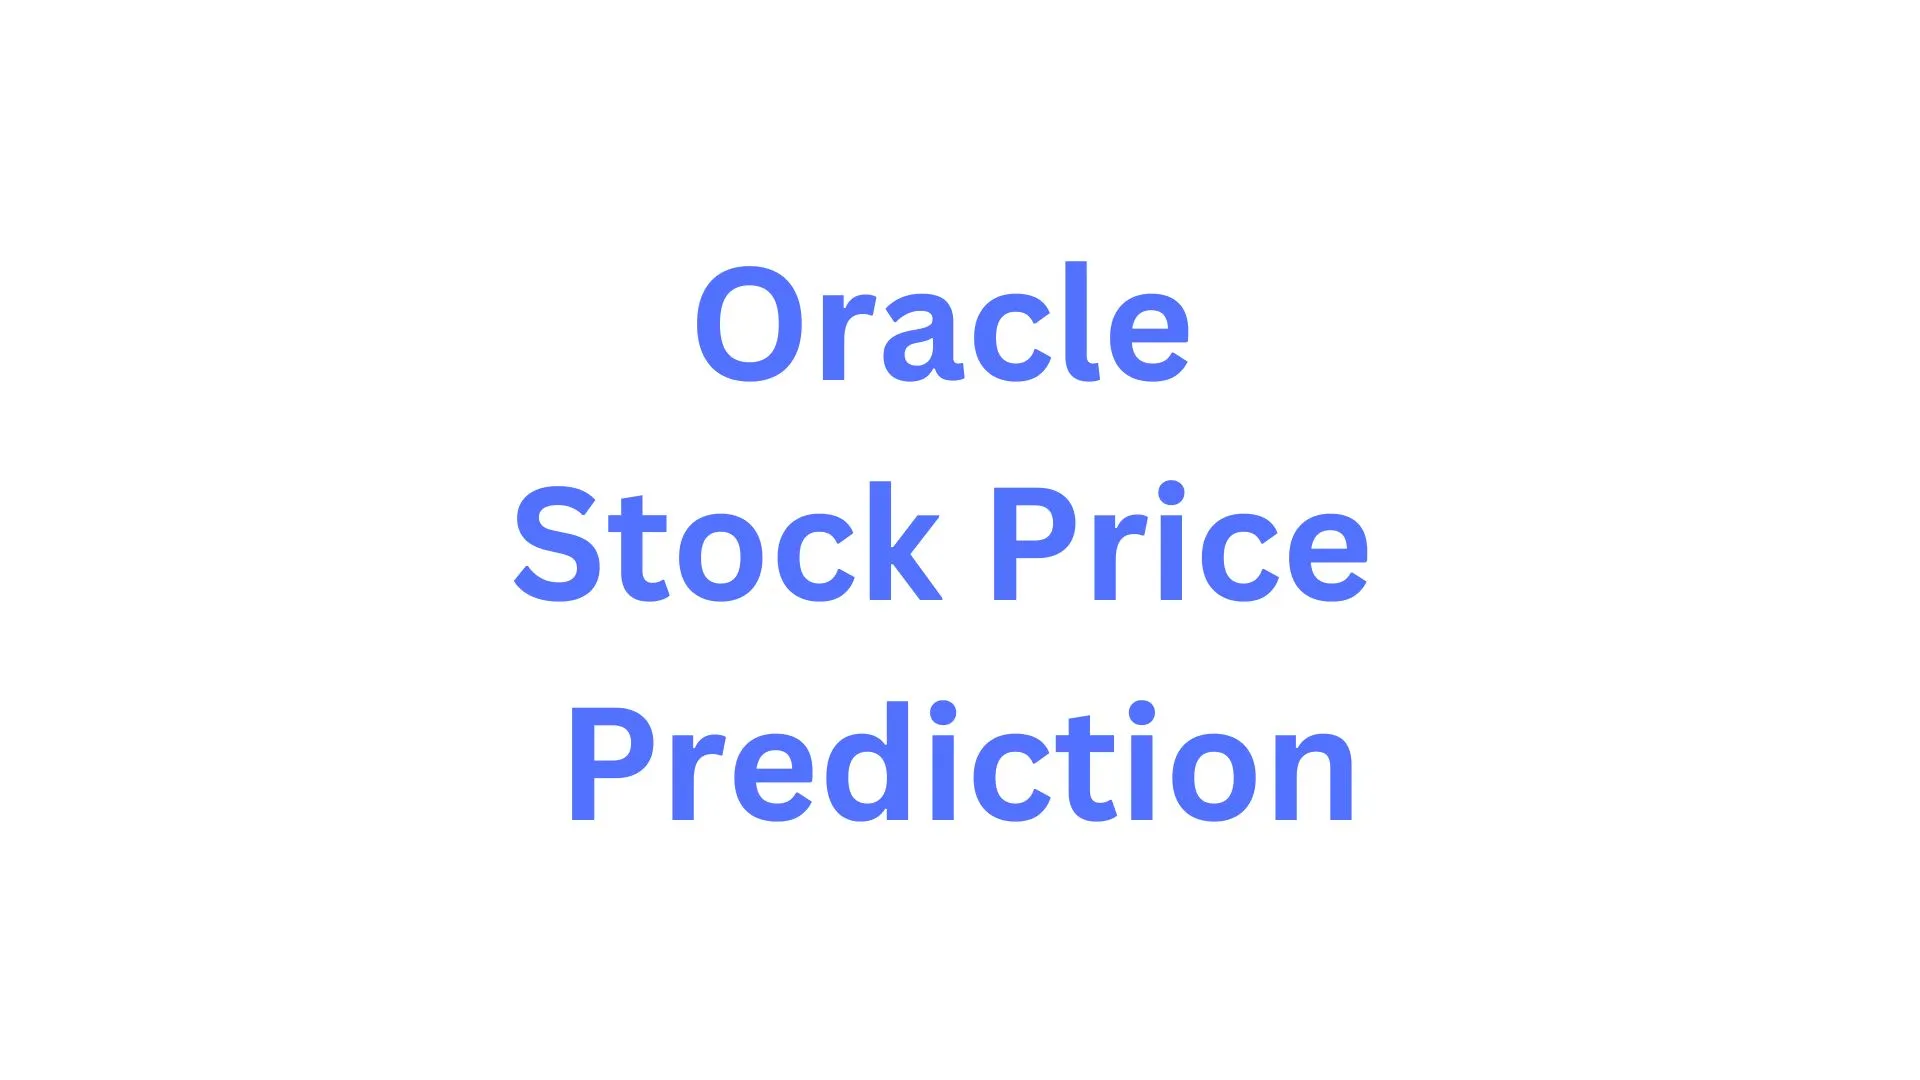 Oracle Stock Price Prediction